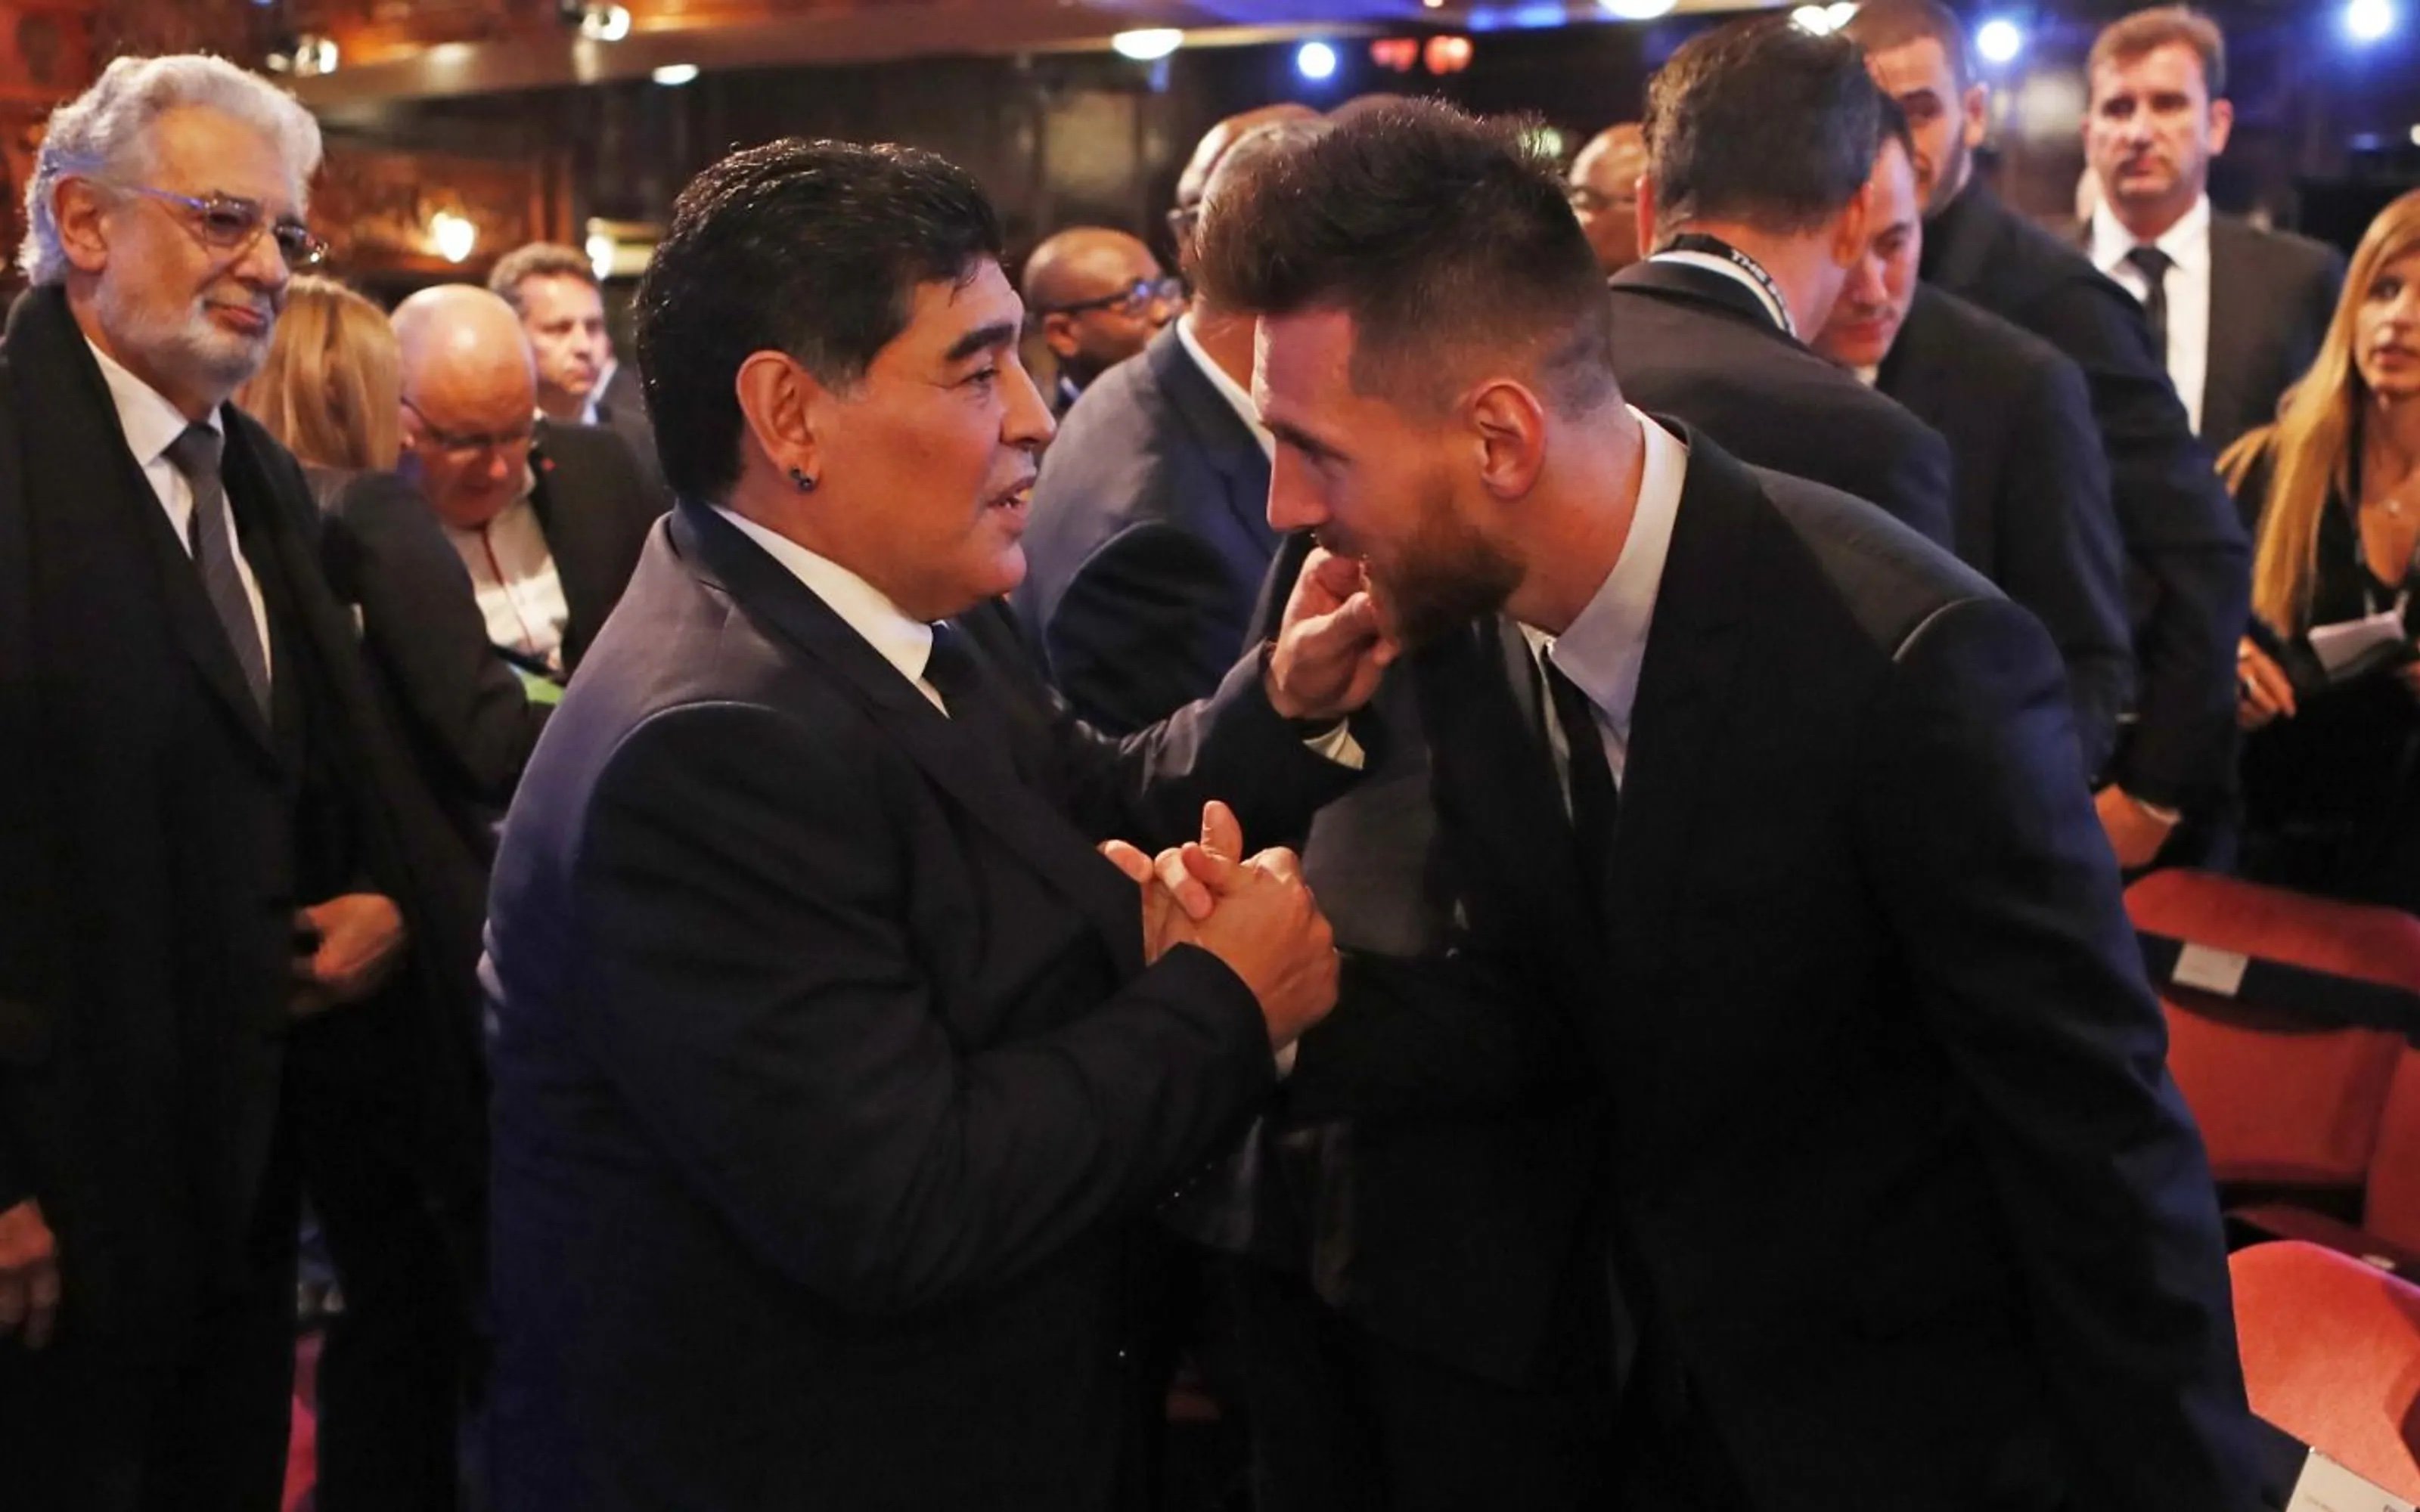 La emotiva dedicatoria de Messi a Maradona: "Eterno"